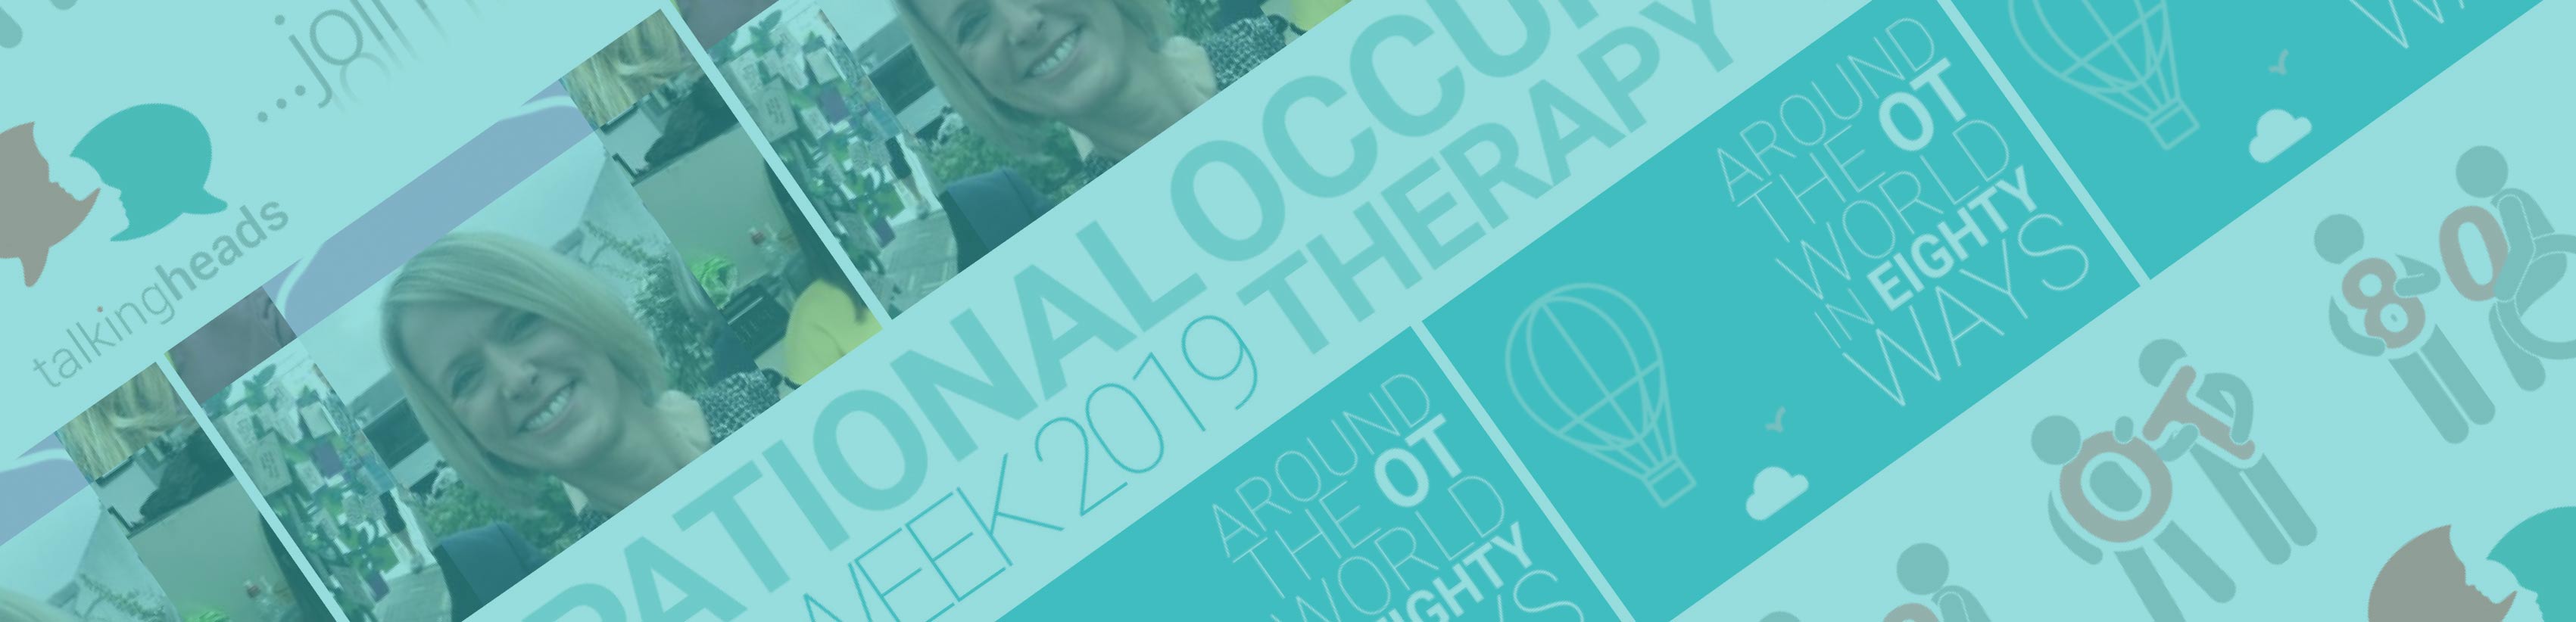 Krysalis celebrates occupational therapy week 2019